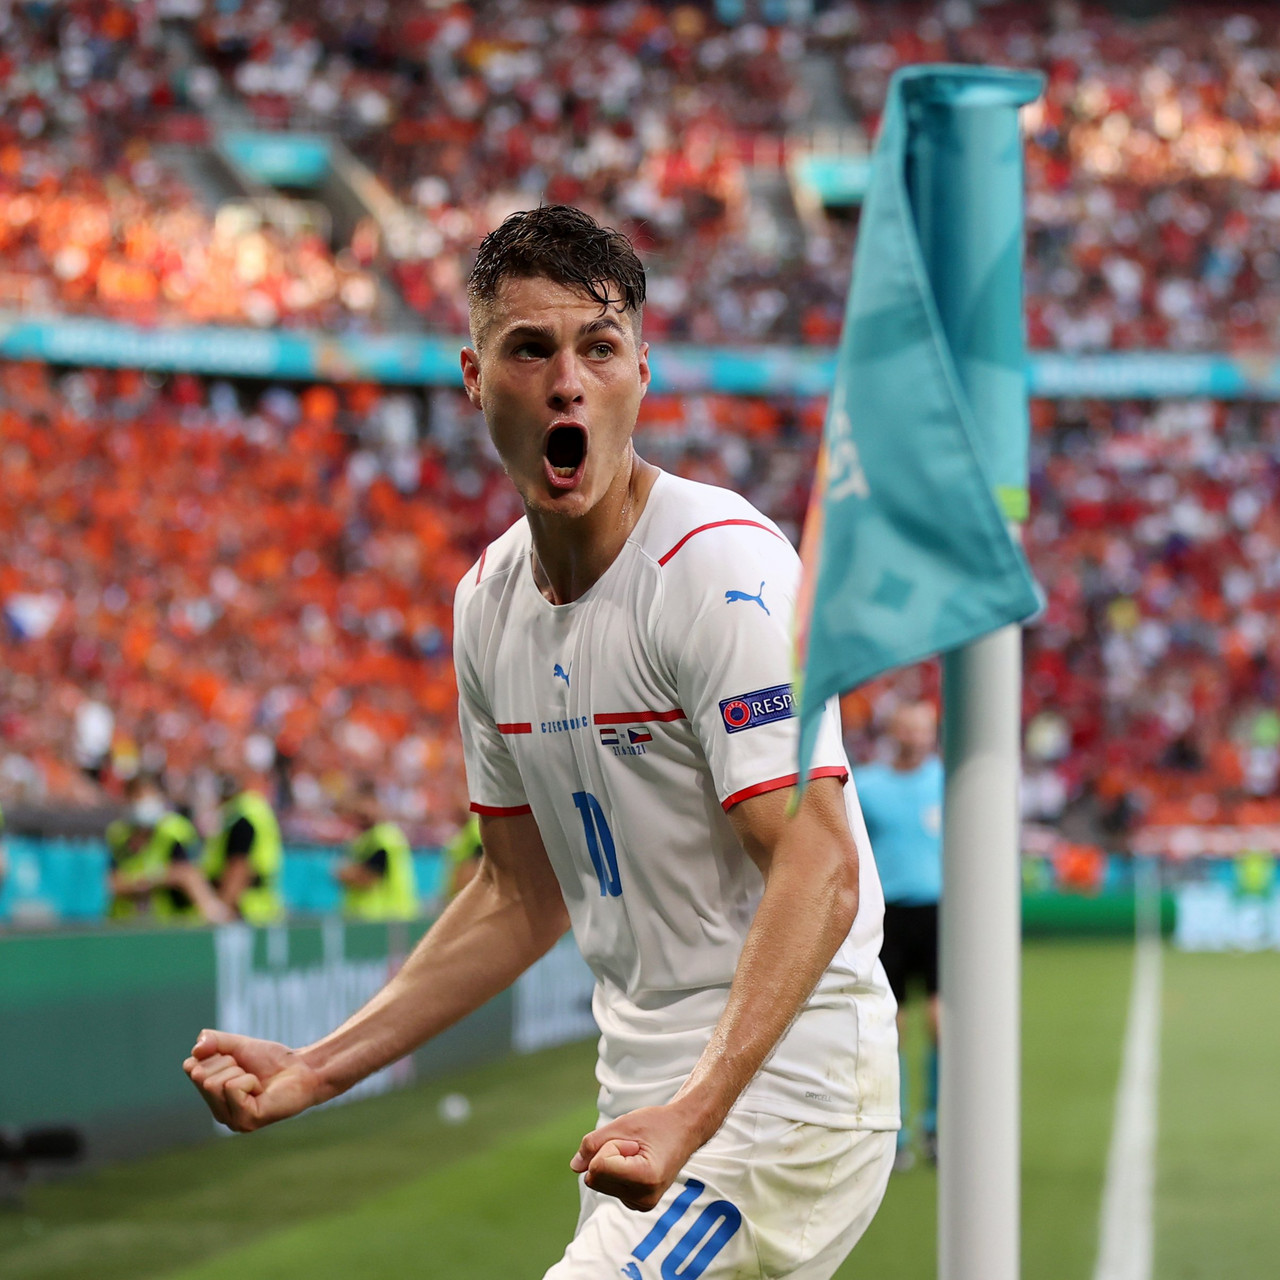 EURO 2020: La Repubblica Ceca batte a sorpresa l'Olanda 2-0